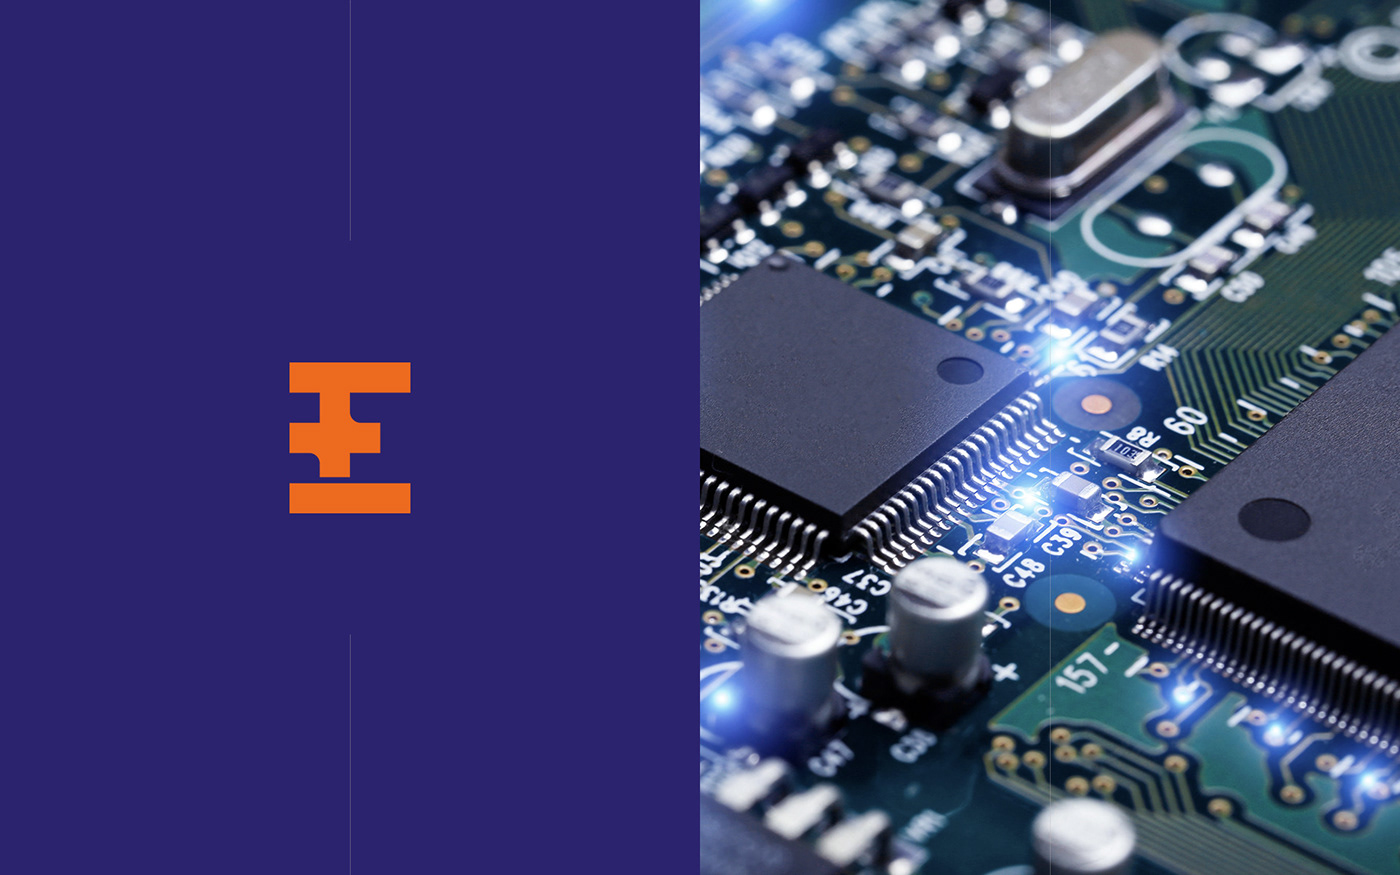 blue Electronics industry logo orange plus processor Website